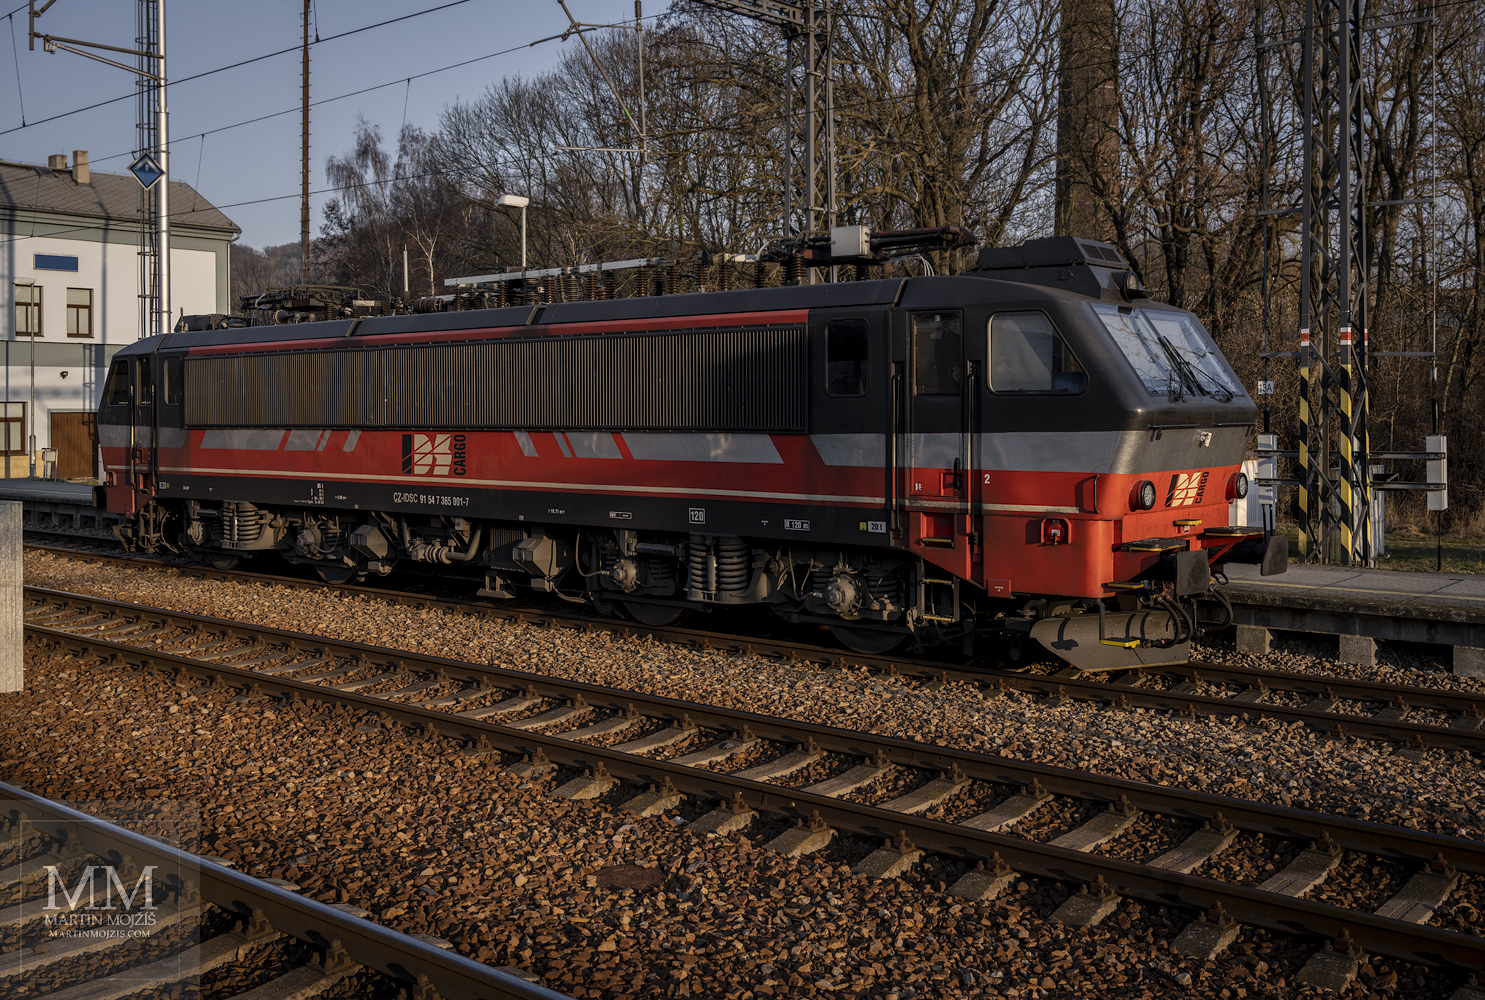 Electric locomotive 365 001-7 IDS Cargo, also called Belgian.